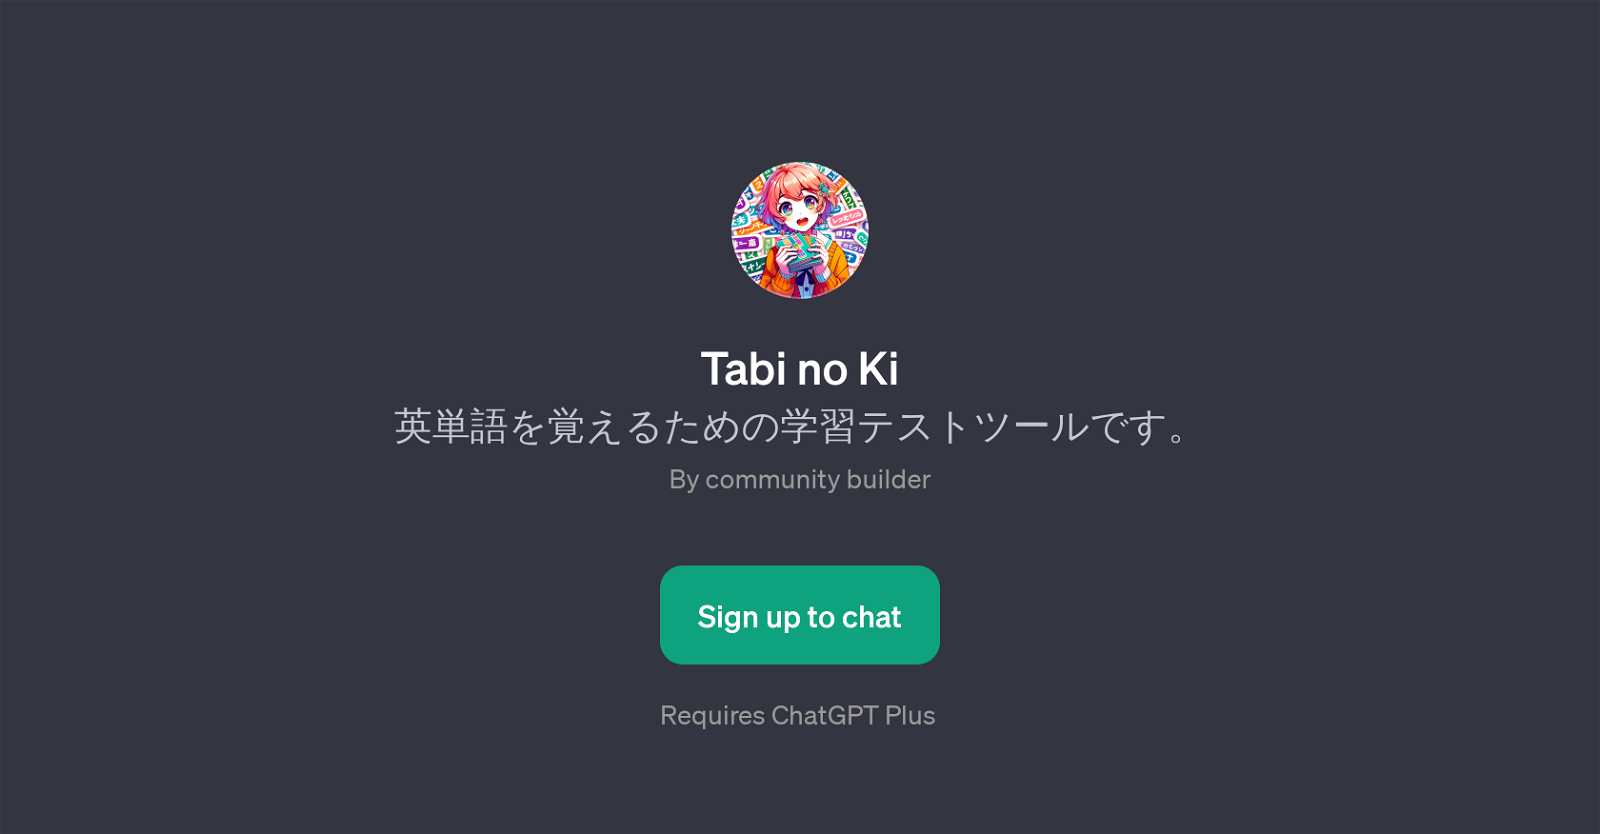 Tabi no Ki website